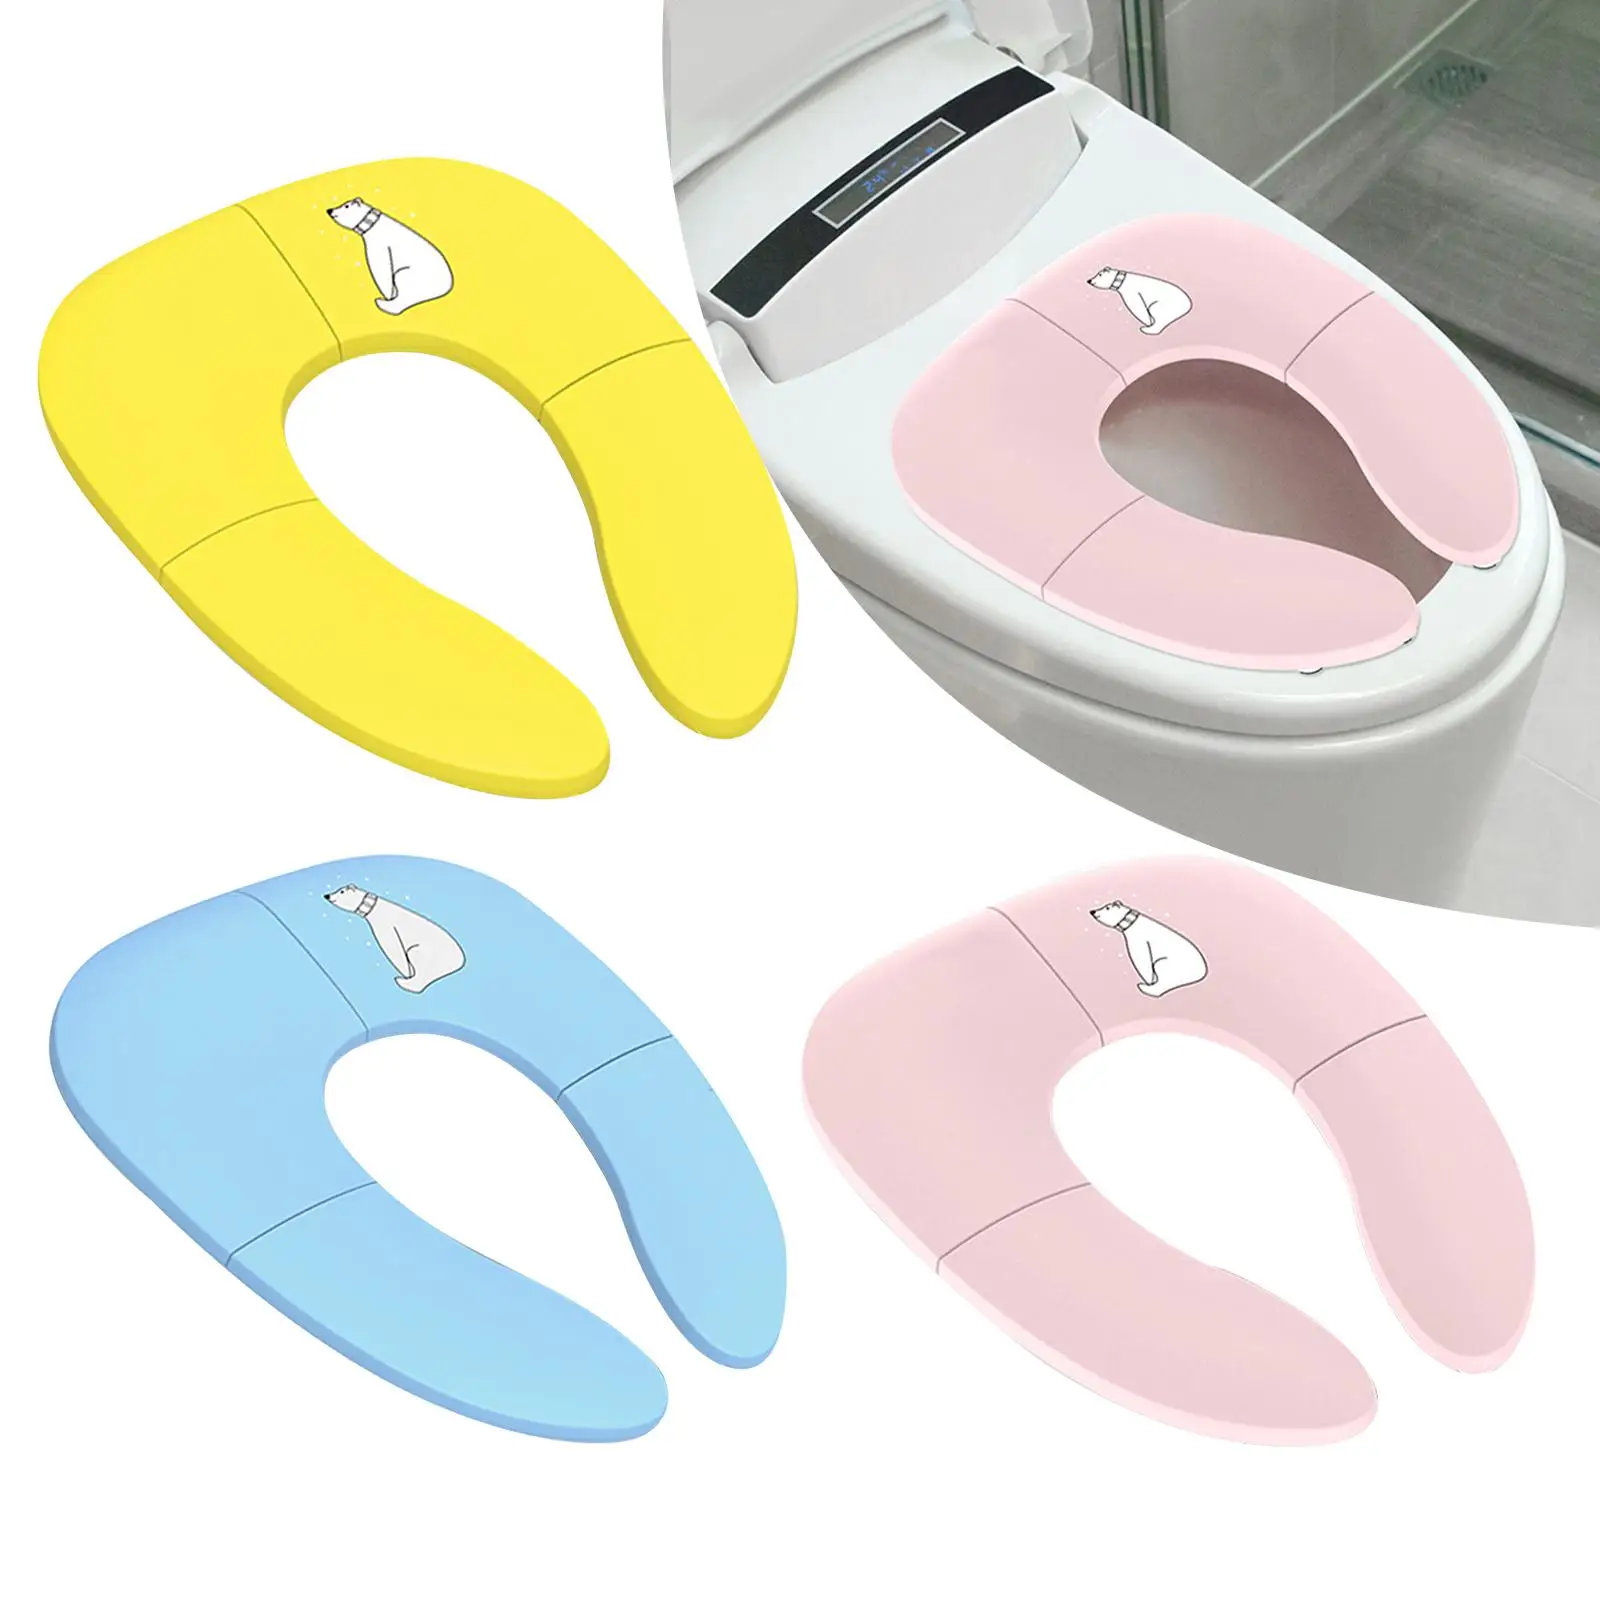 Foldable Toilet Pad Training Seat Potty  Non Slip Portable Toilet  Toilet Cushion for Home Use Toddler Baby Boys Kids